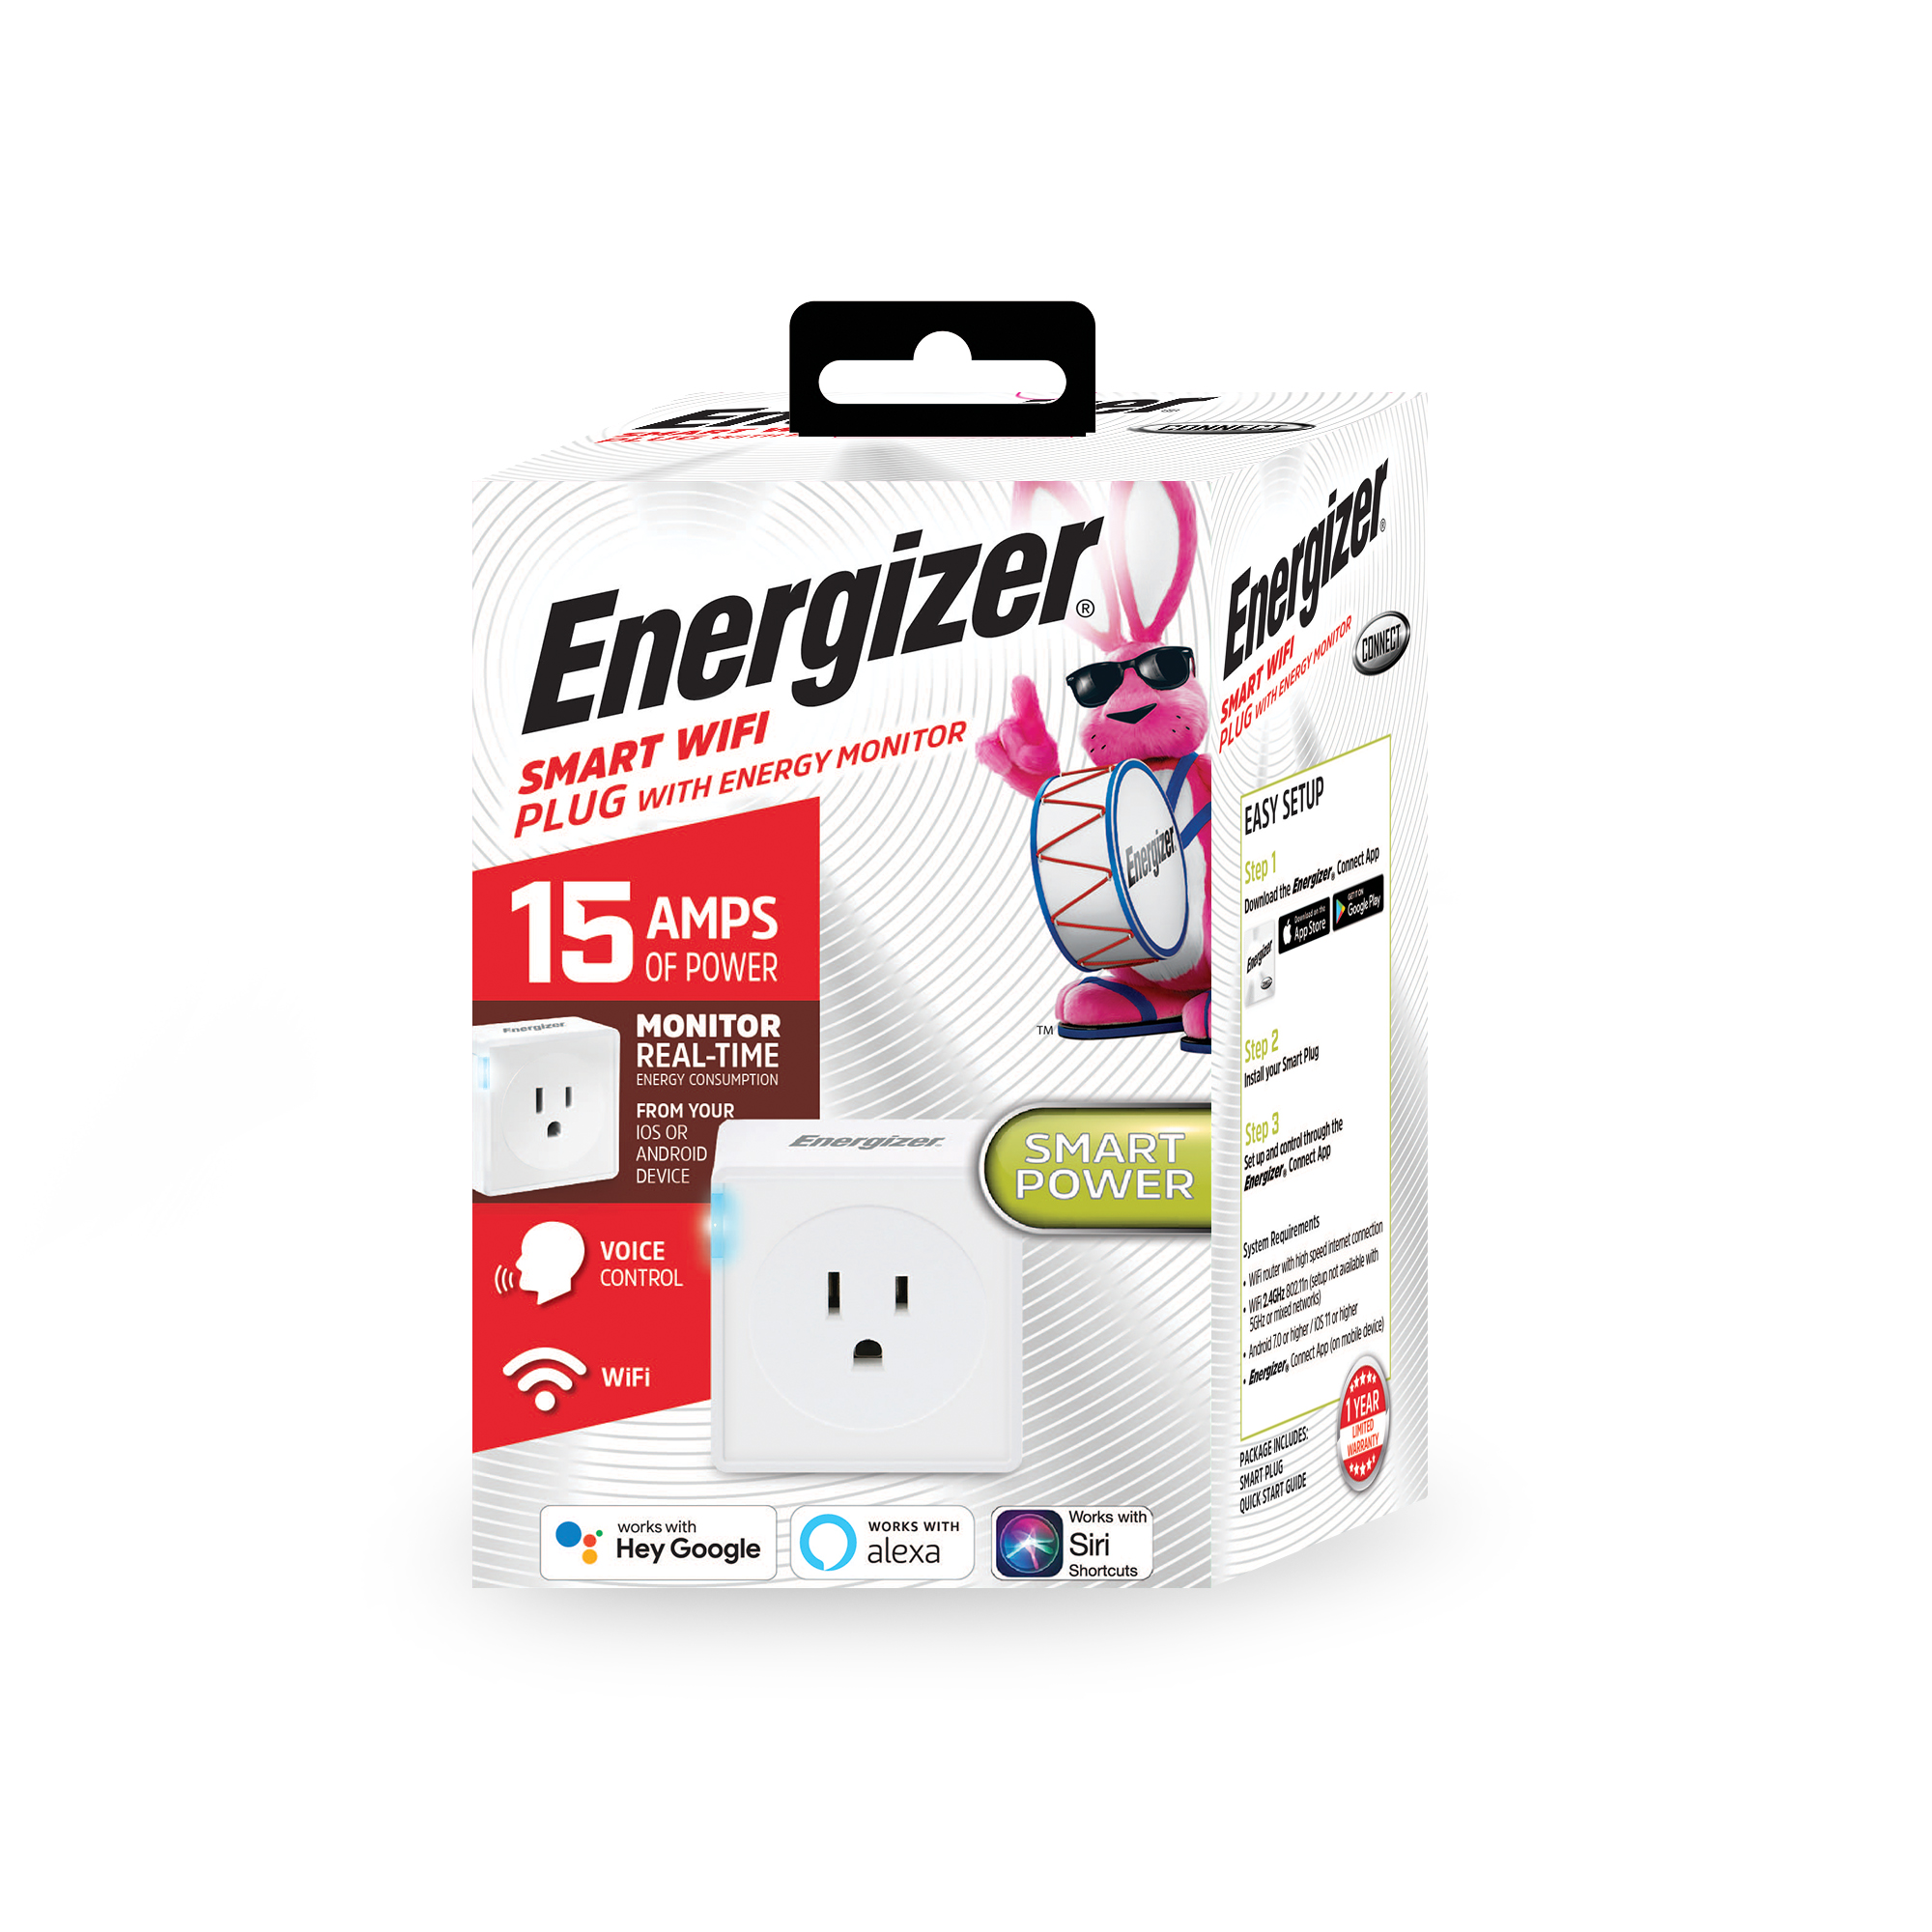 Energizer Smart Wifi Plug with Energy Monitor